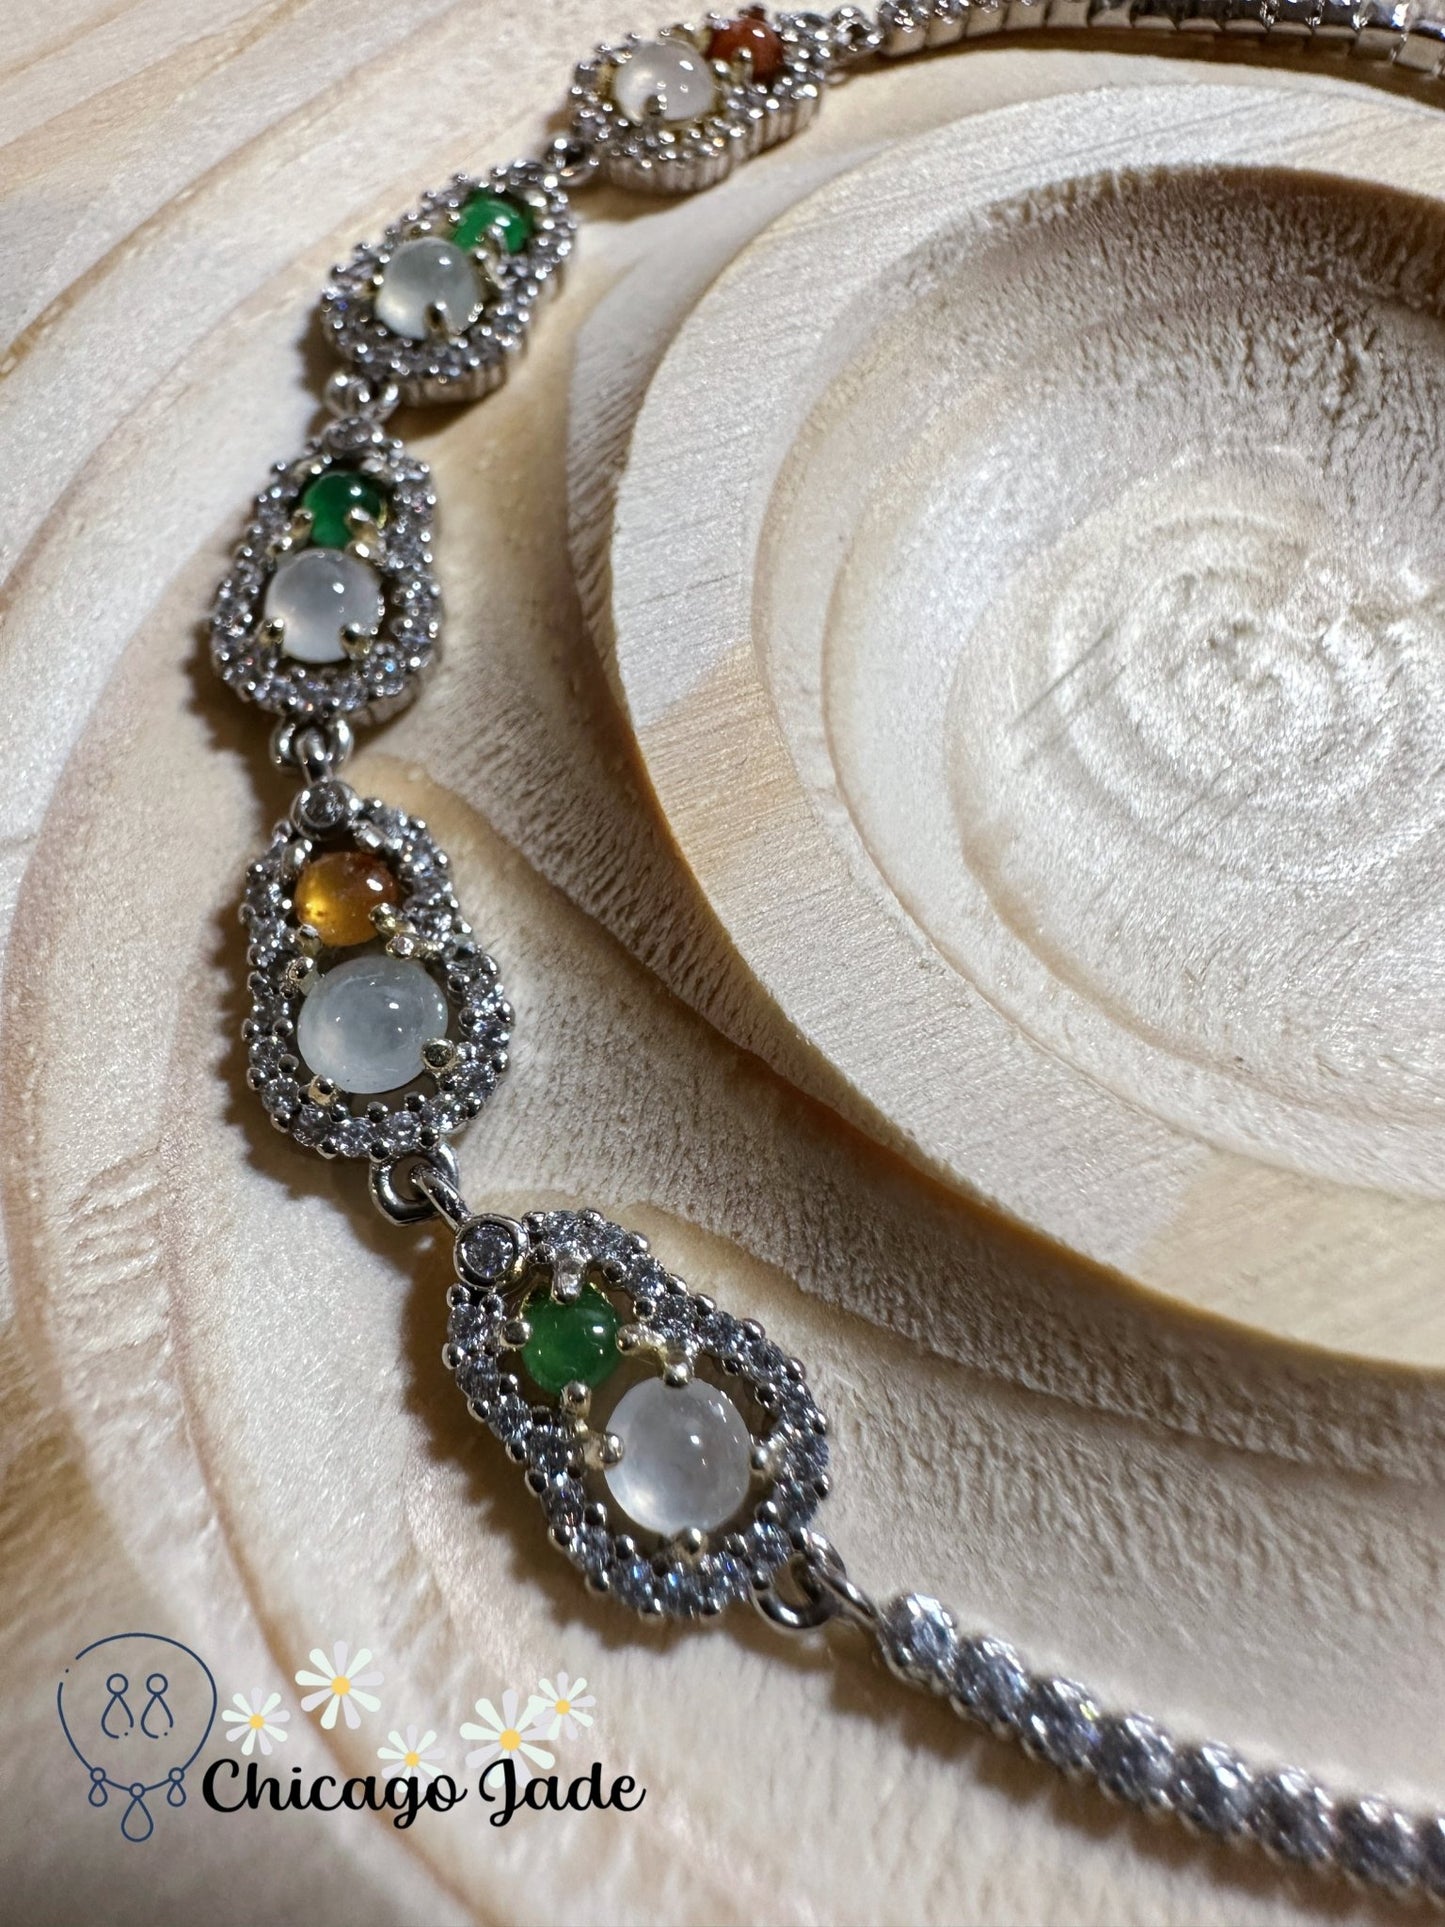 Green, icy and yellow jadeite jade stone on sterling S925 silver bracelet - Chicago Jadeanniversarybeadedbirthday giftChicago Jade